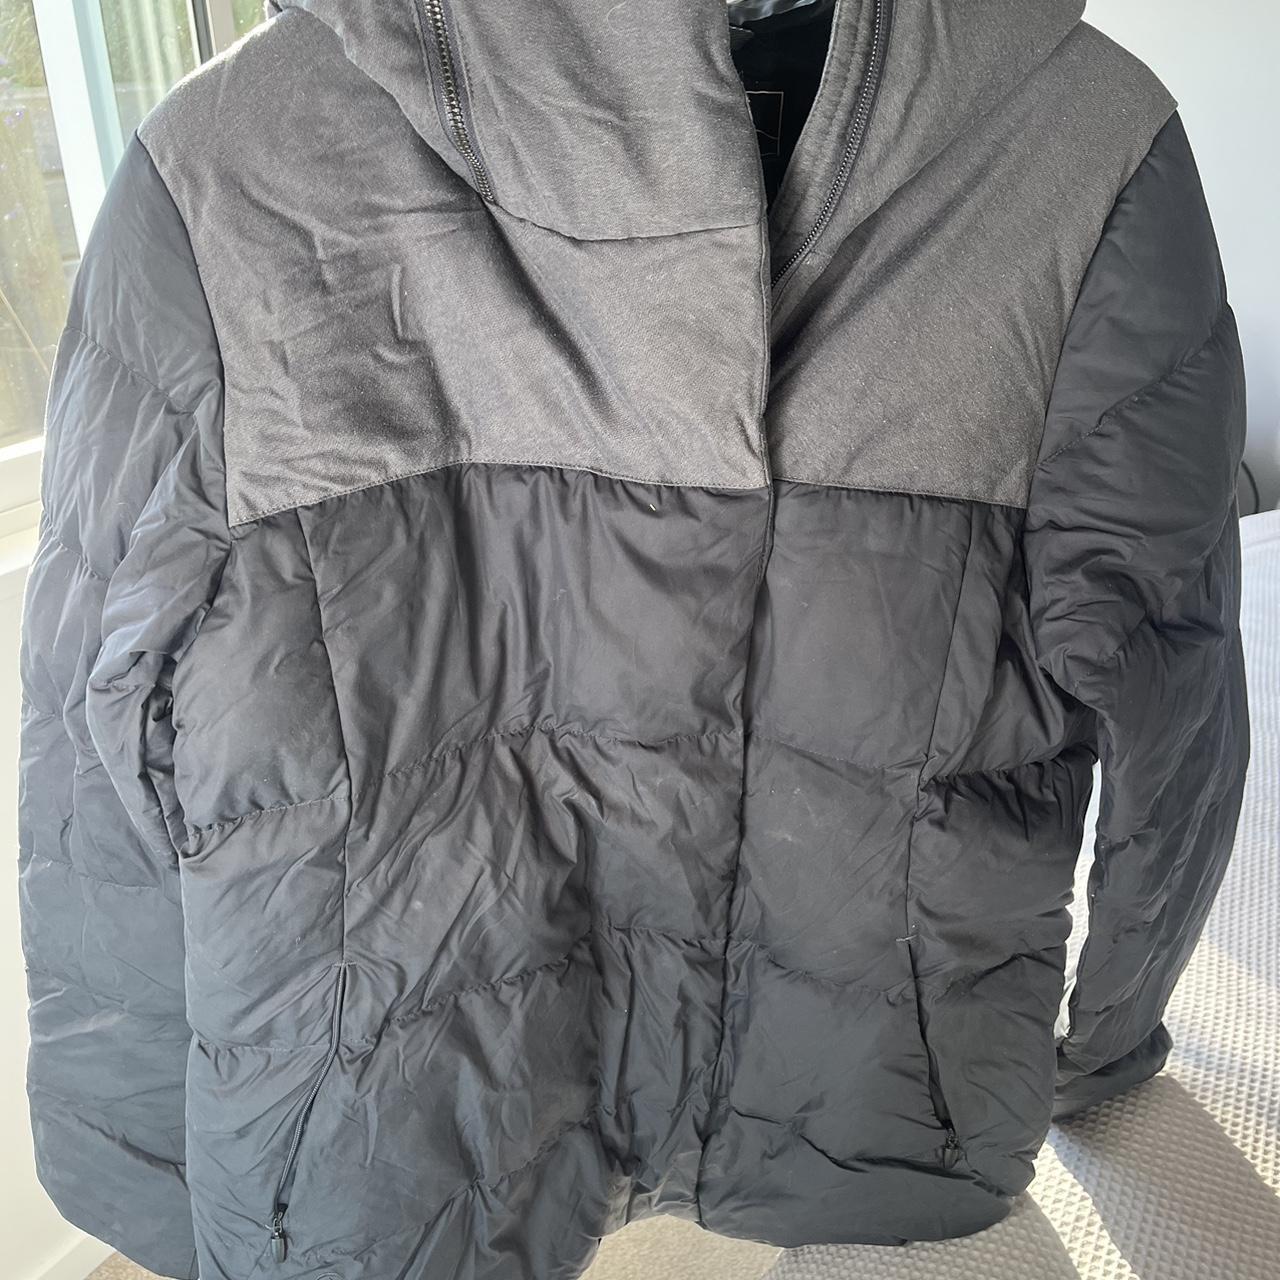 Mac pac puffer jacket with hood - Depop